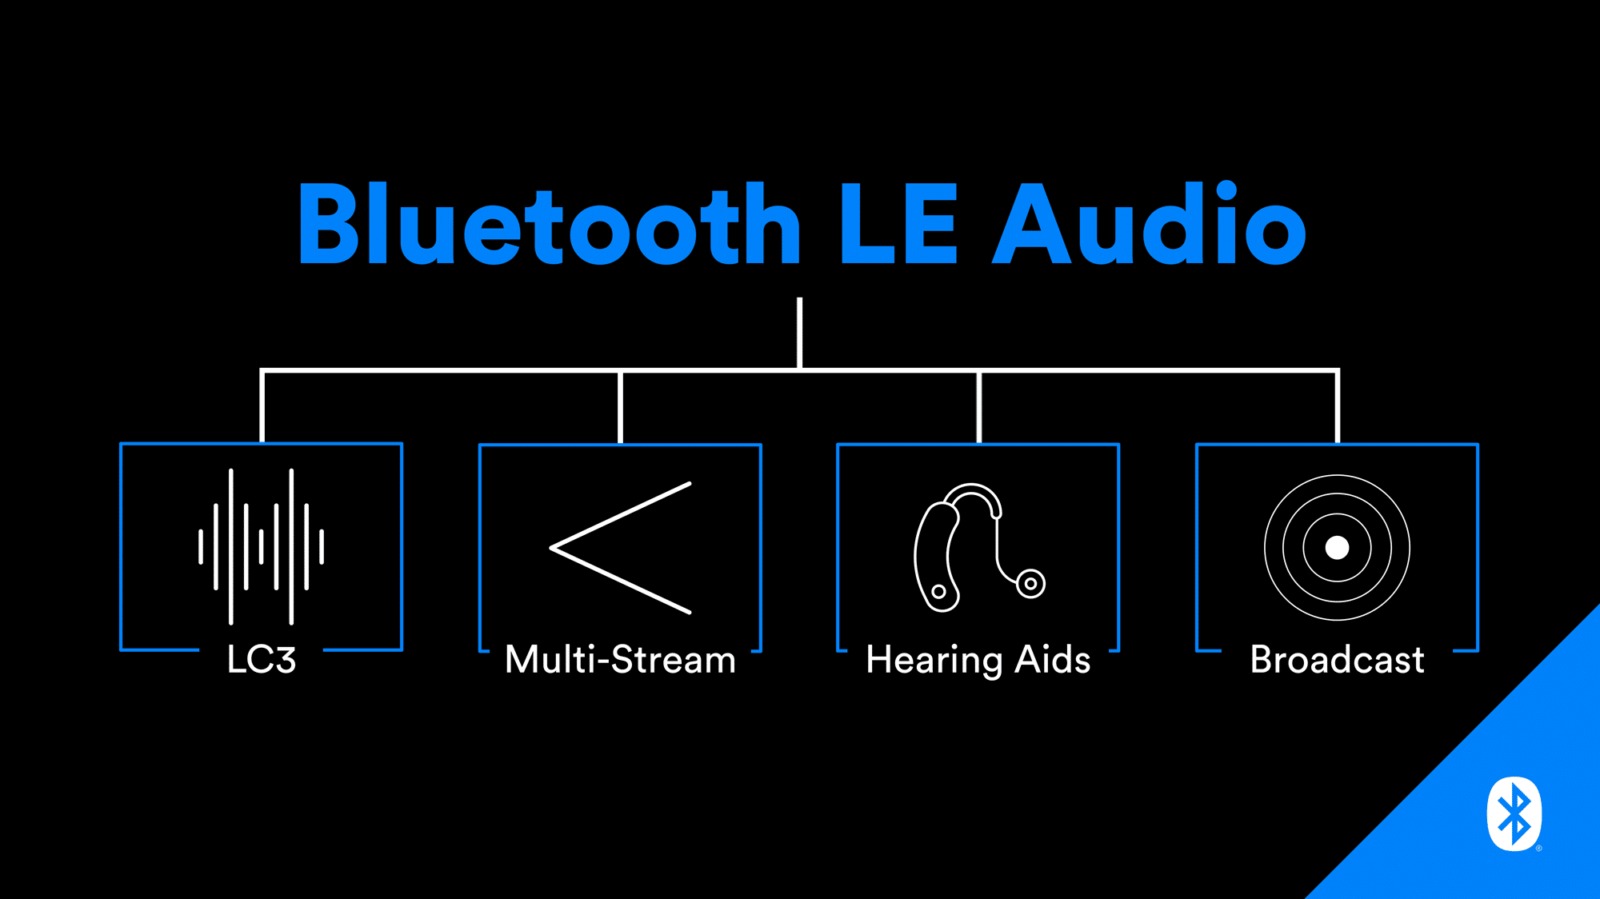 Bluetooth LE Audiodiagramm.